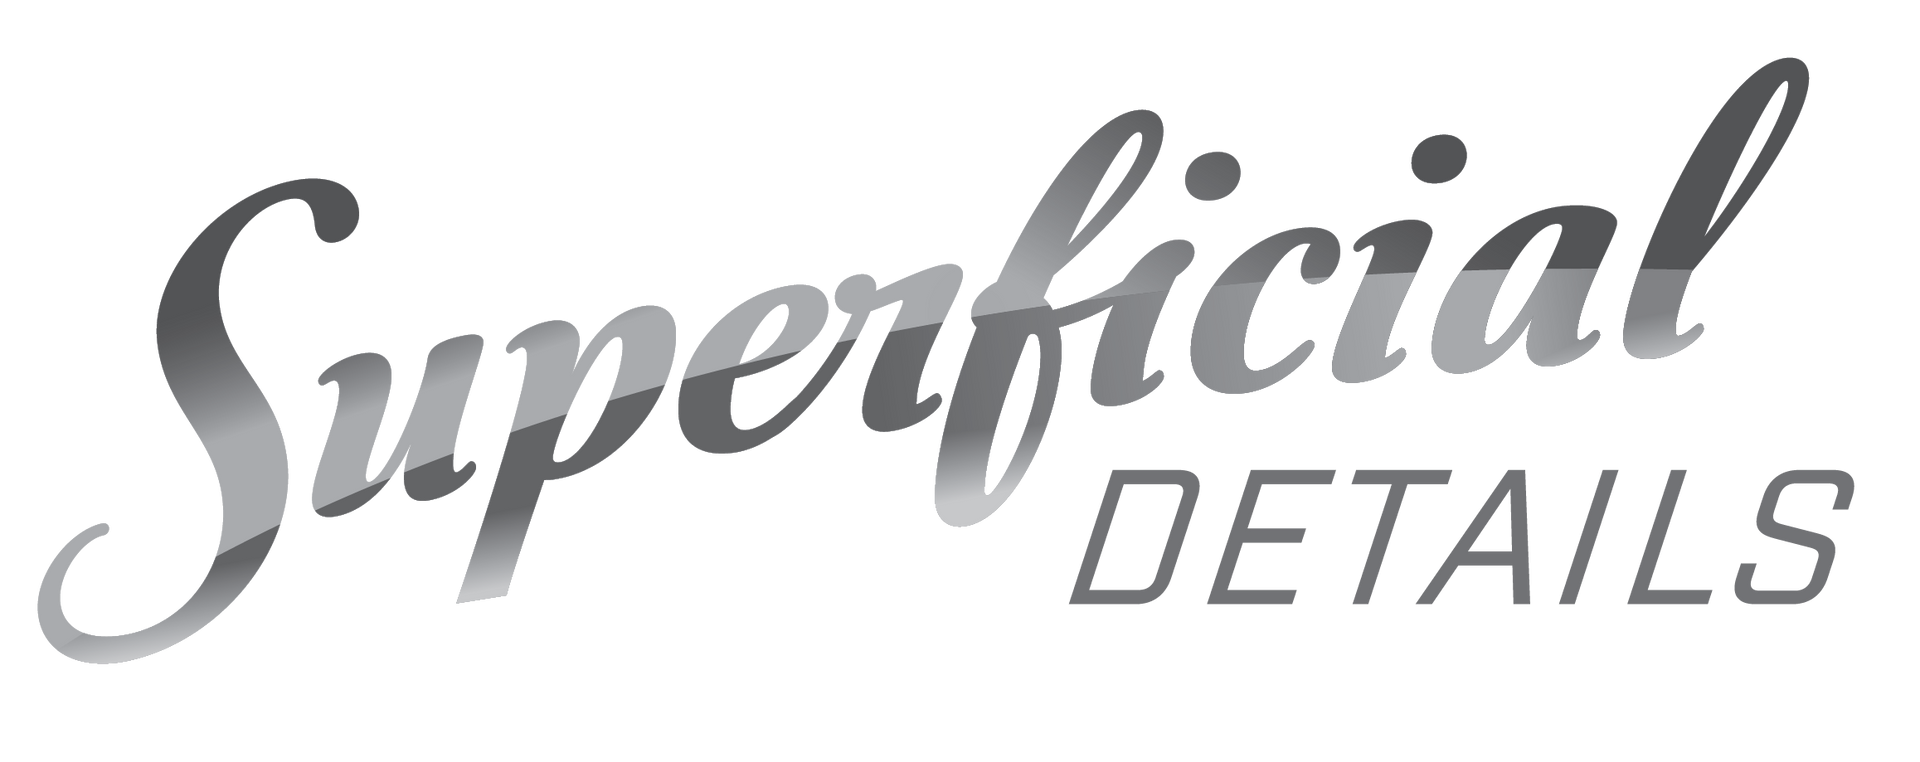 Superficial Details Business Logo